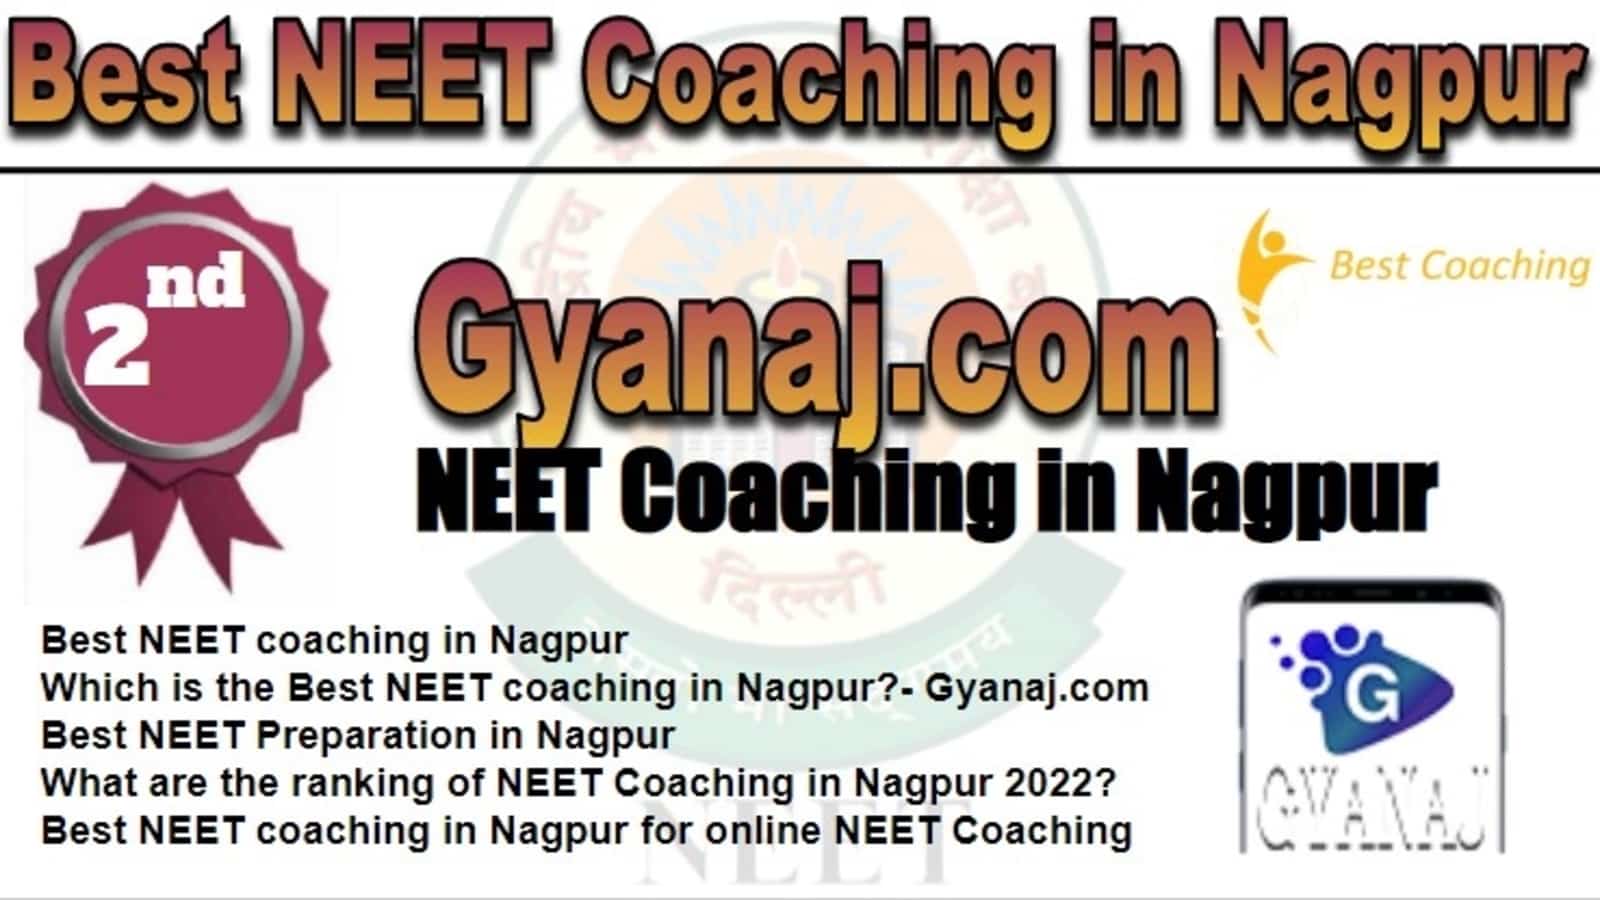 Rank 2 Best NEET Coaching in Nagpur